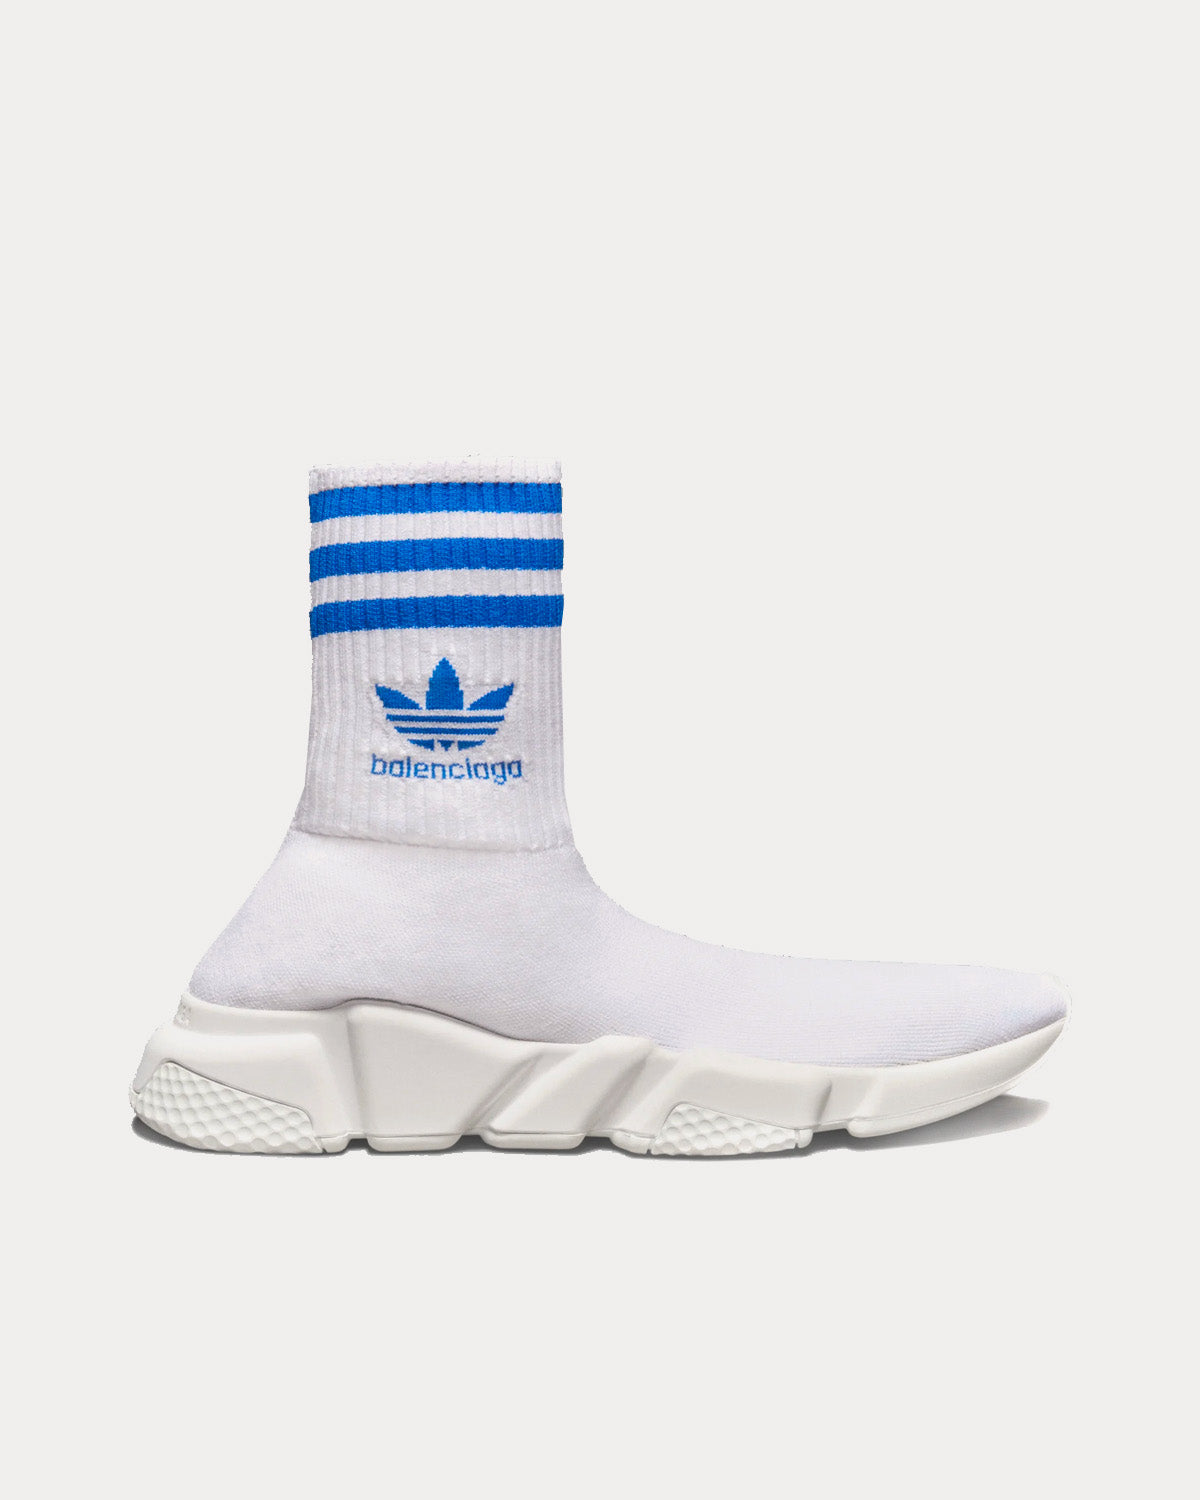 Balenciaga x Adidas - Speed Knit White / Blue High Top Sneakers